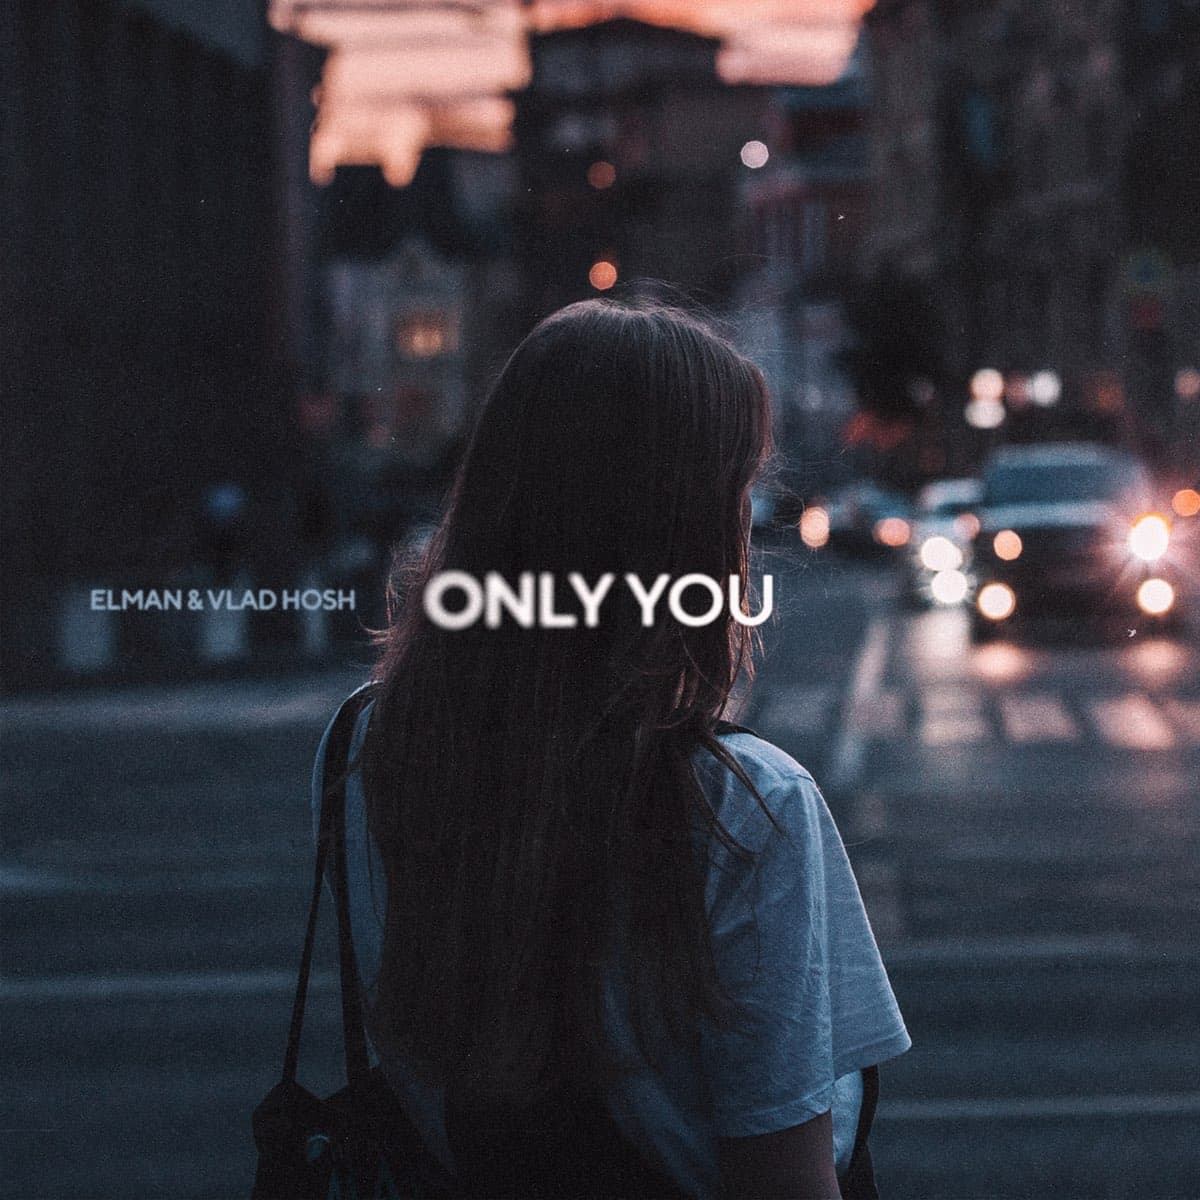 Only you (ELMAN, Vlad Hosh)